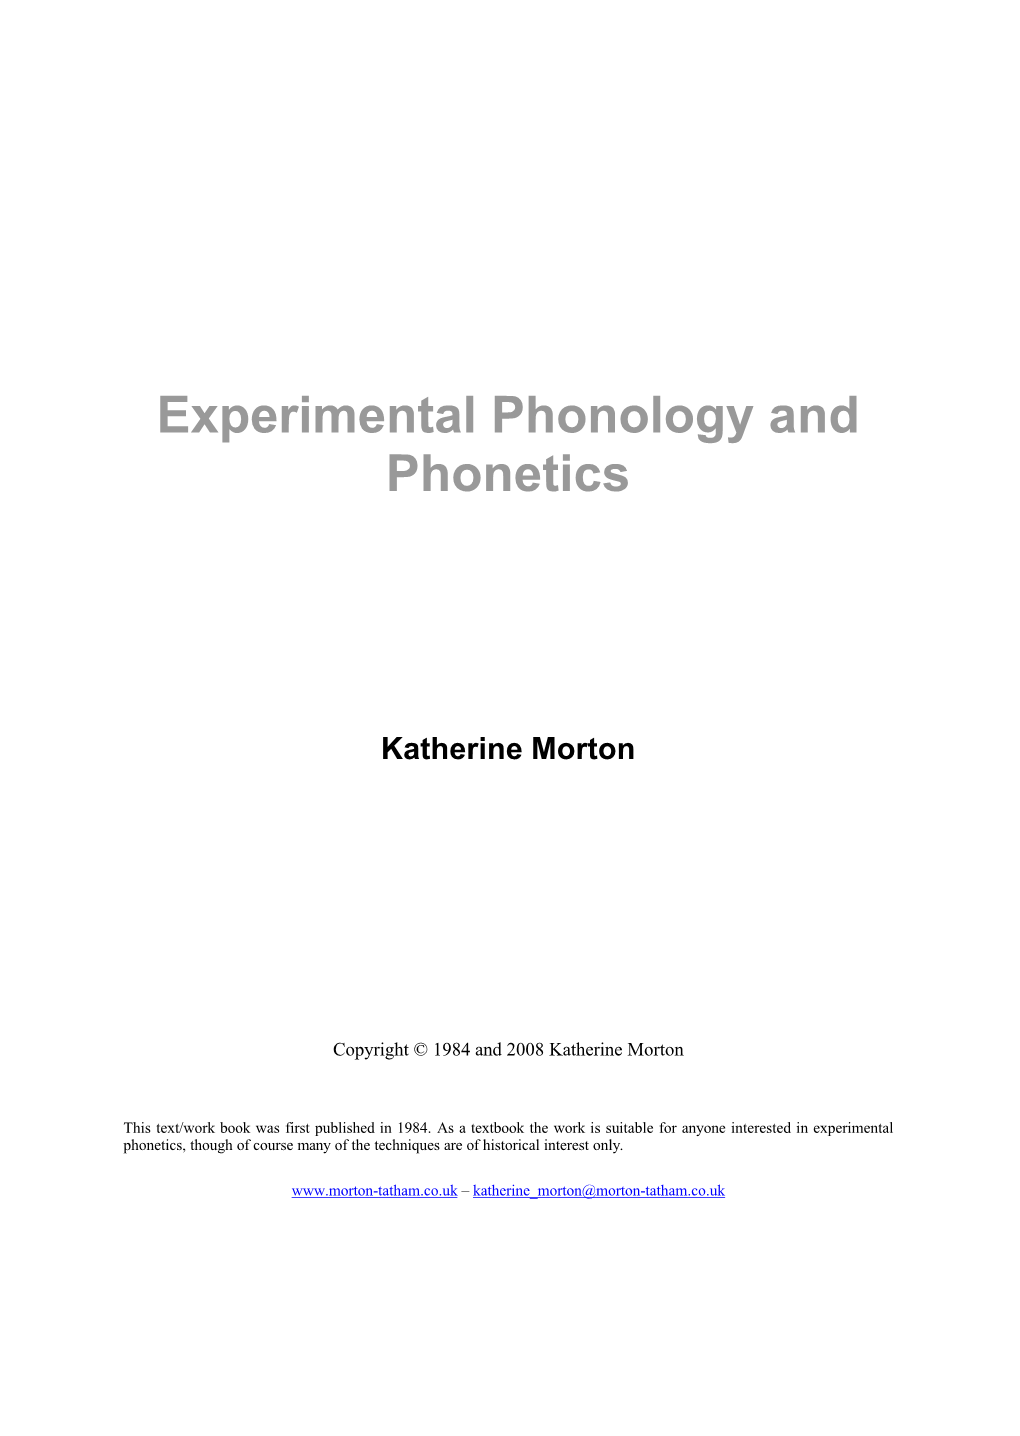 Experimental Phonology and Phonetics